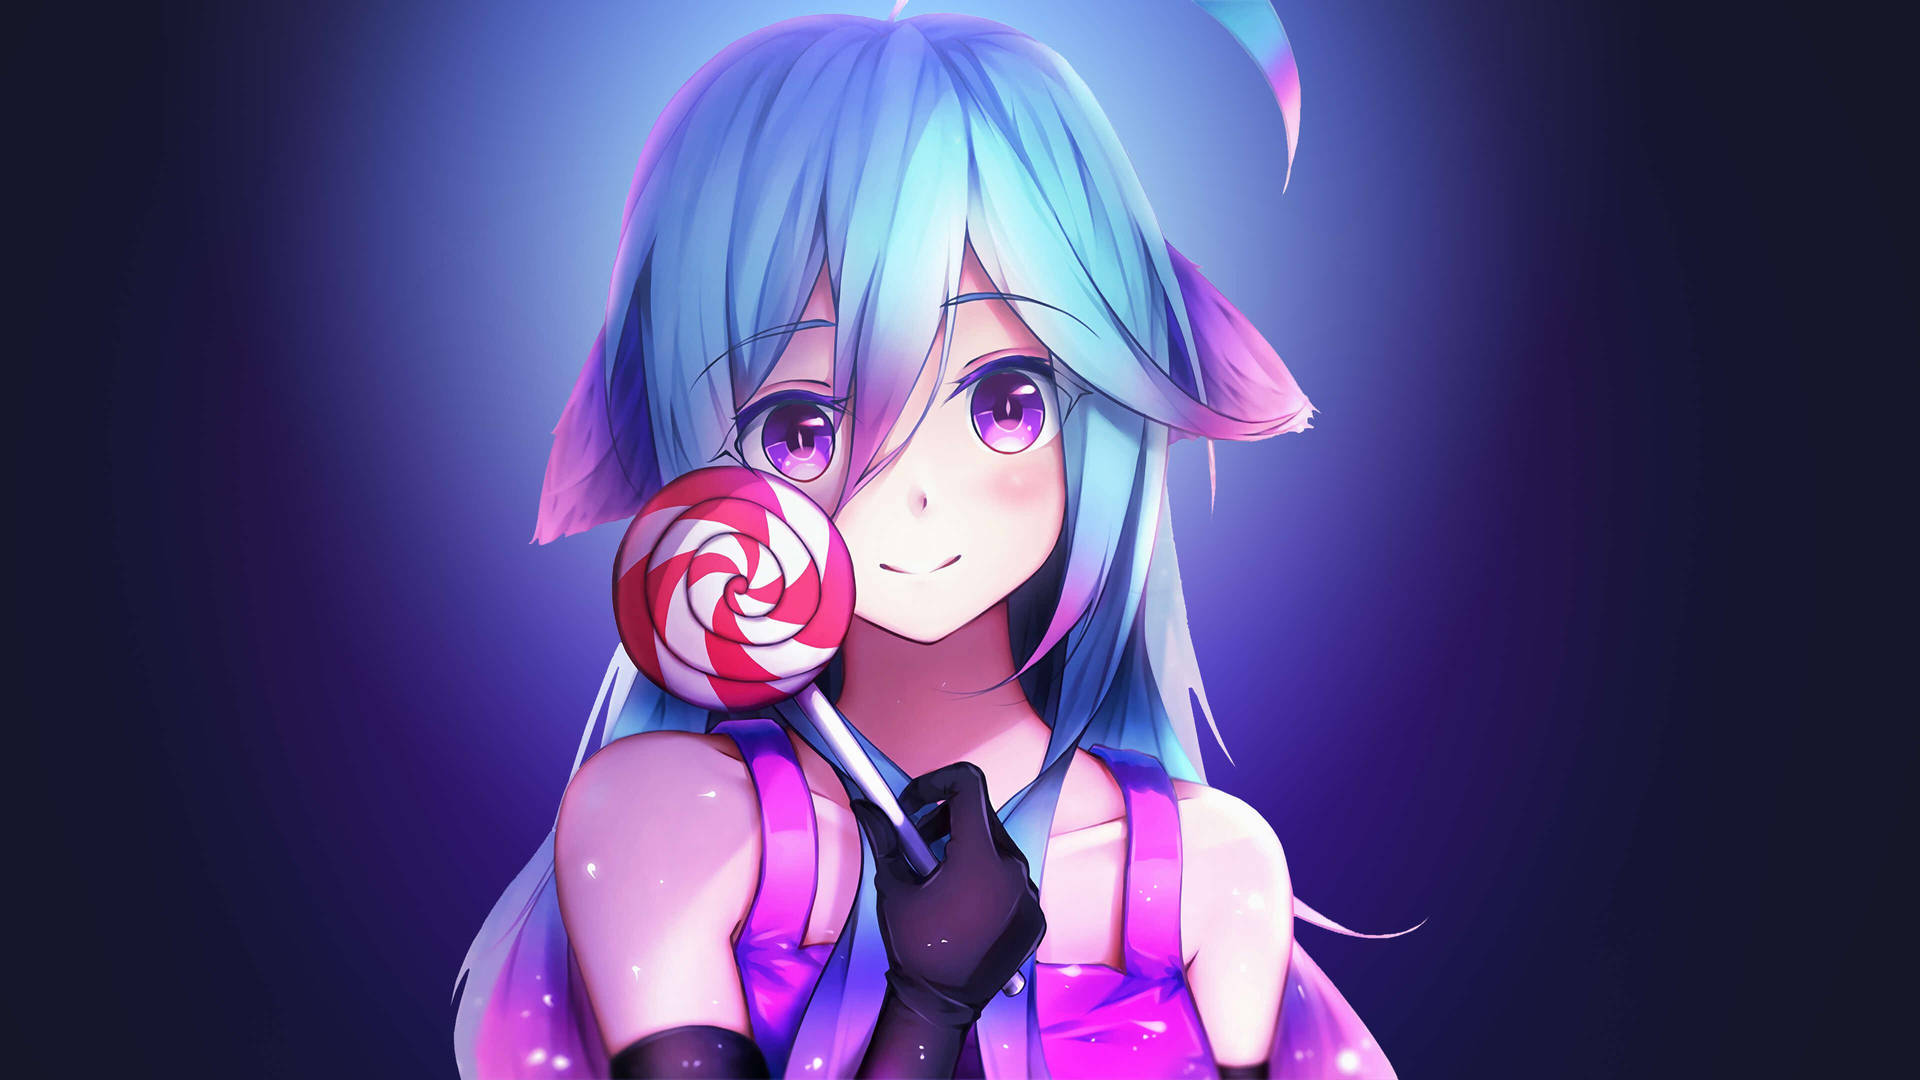 Aesthetic Anime Desktop Cat Girl With Lollipop Background